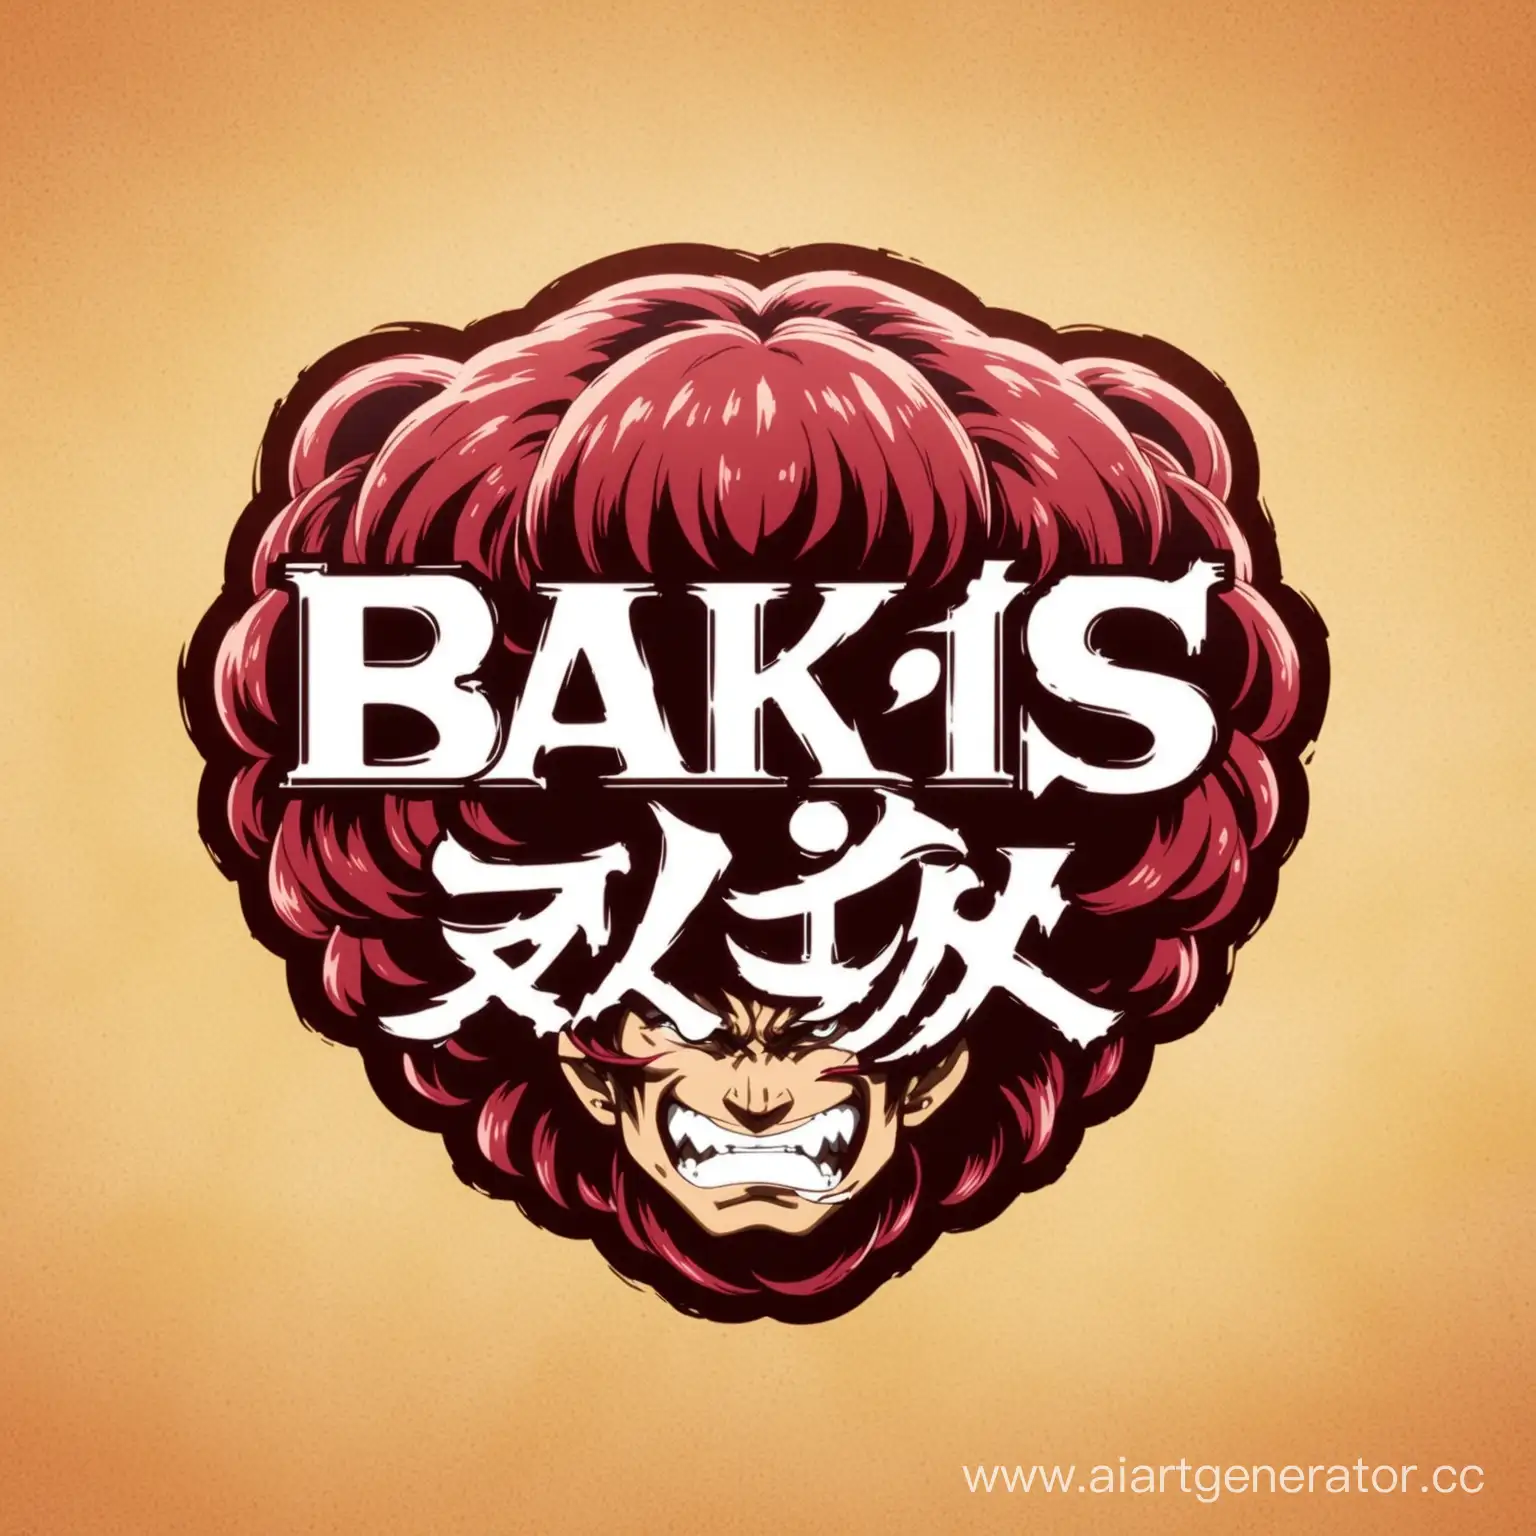 Baki's character logo from the anime